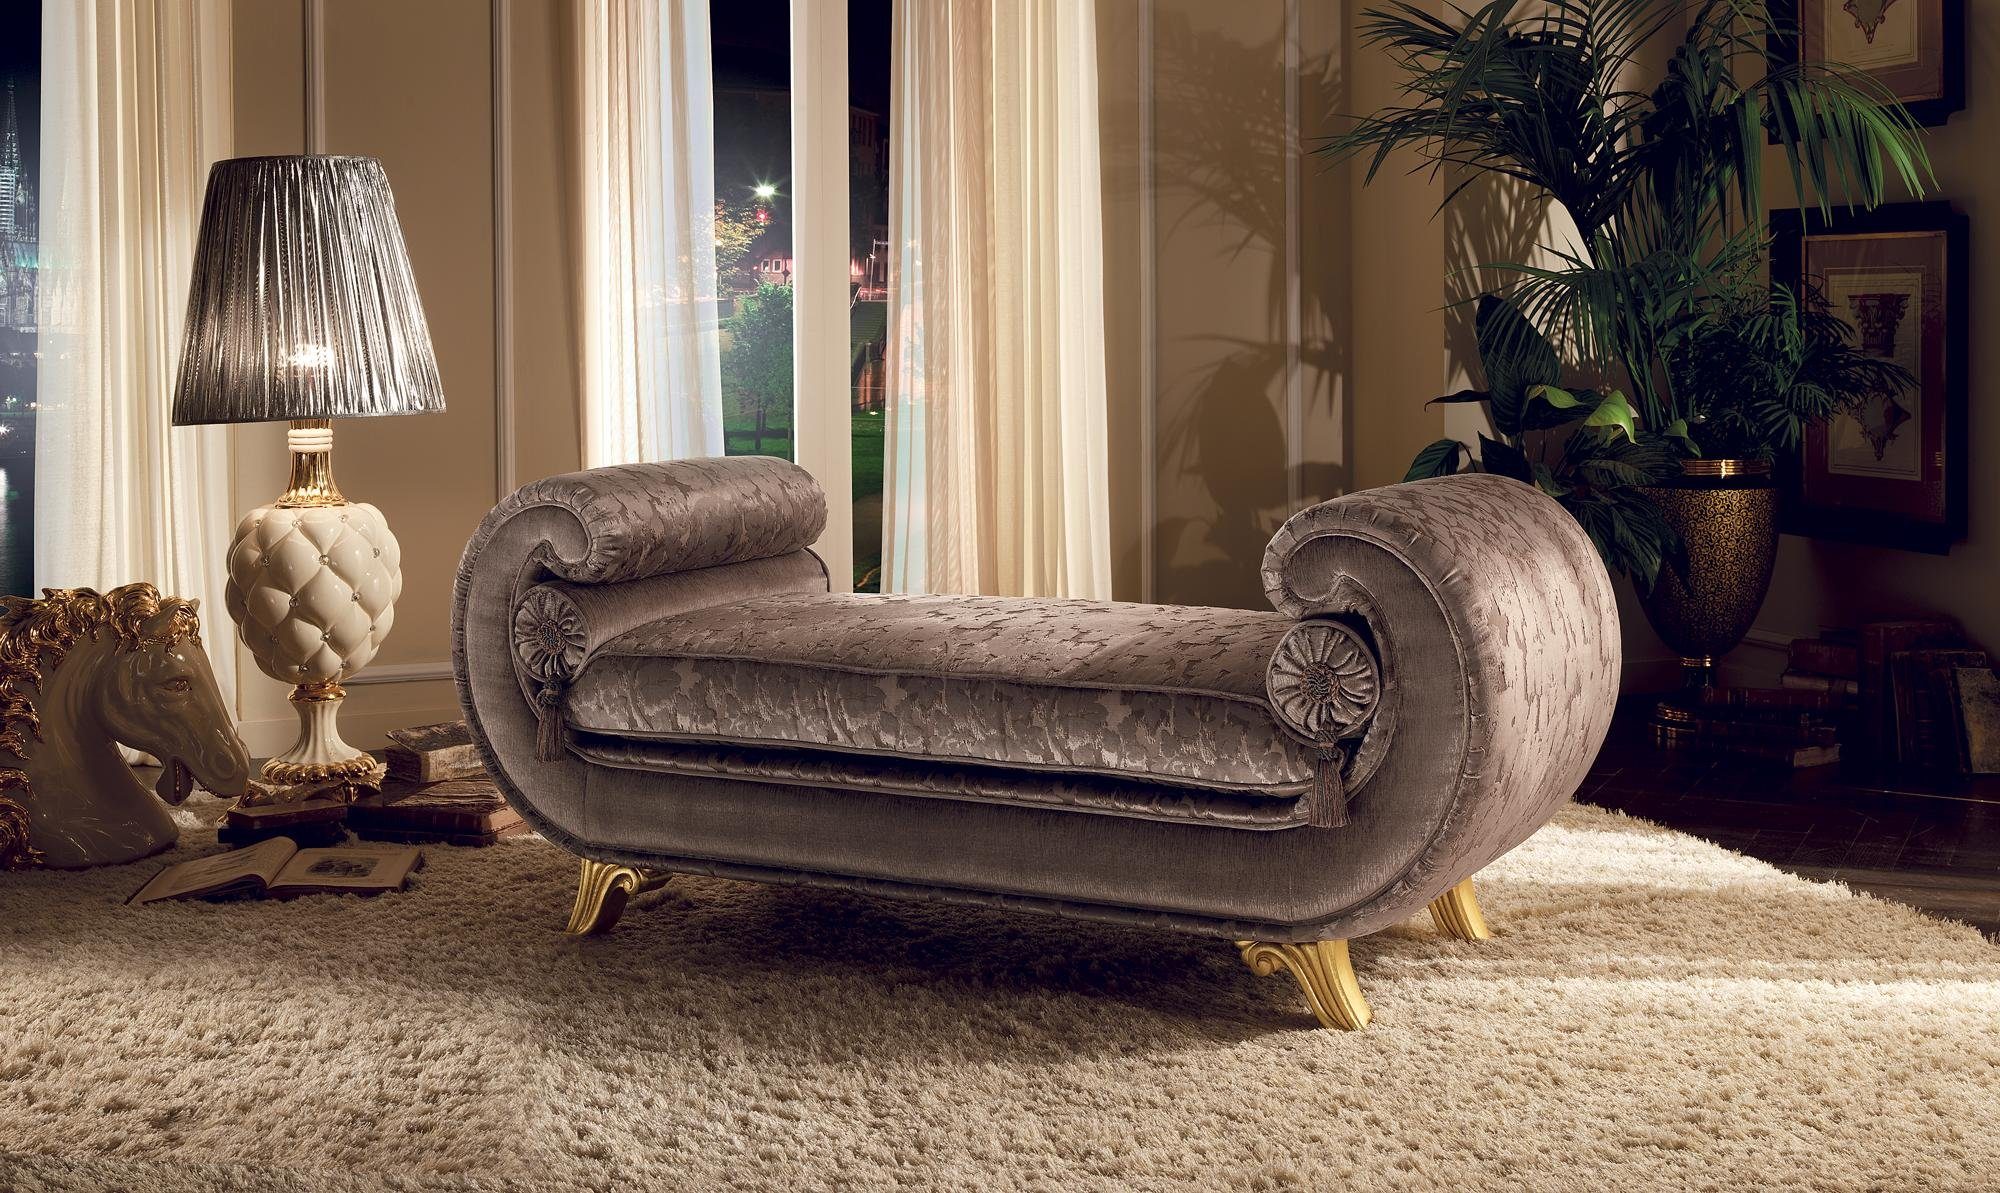 JVmoebel Chaiselongue Chaiselongues Liege Luxus Sofa Sessel Klassisches Design, Made in Europe